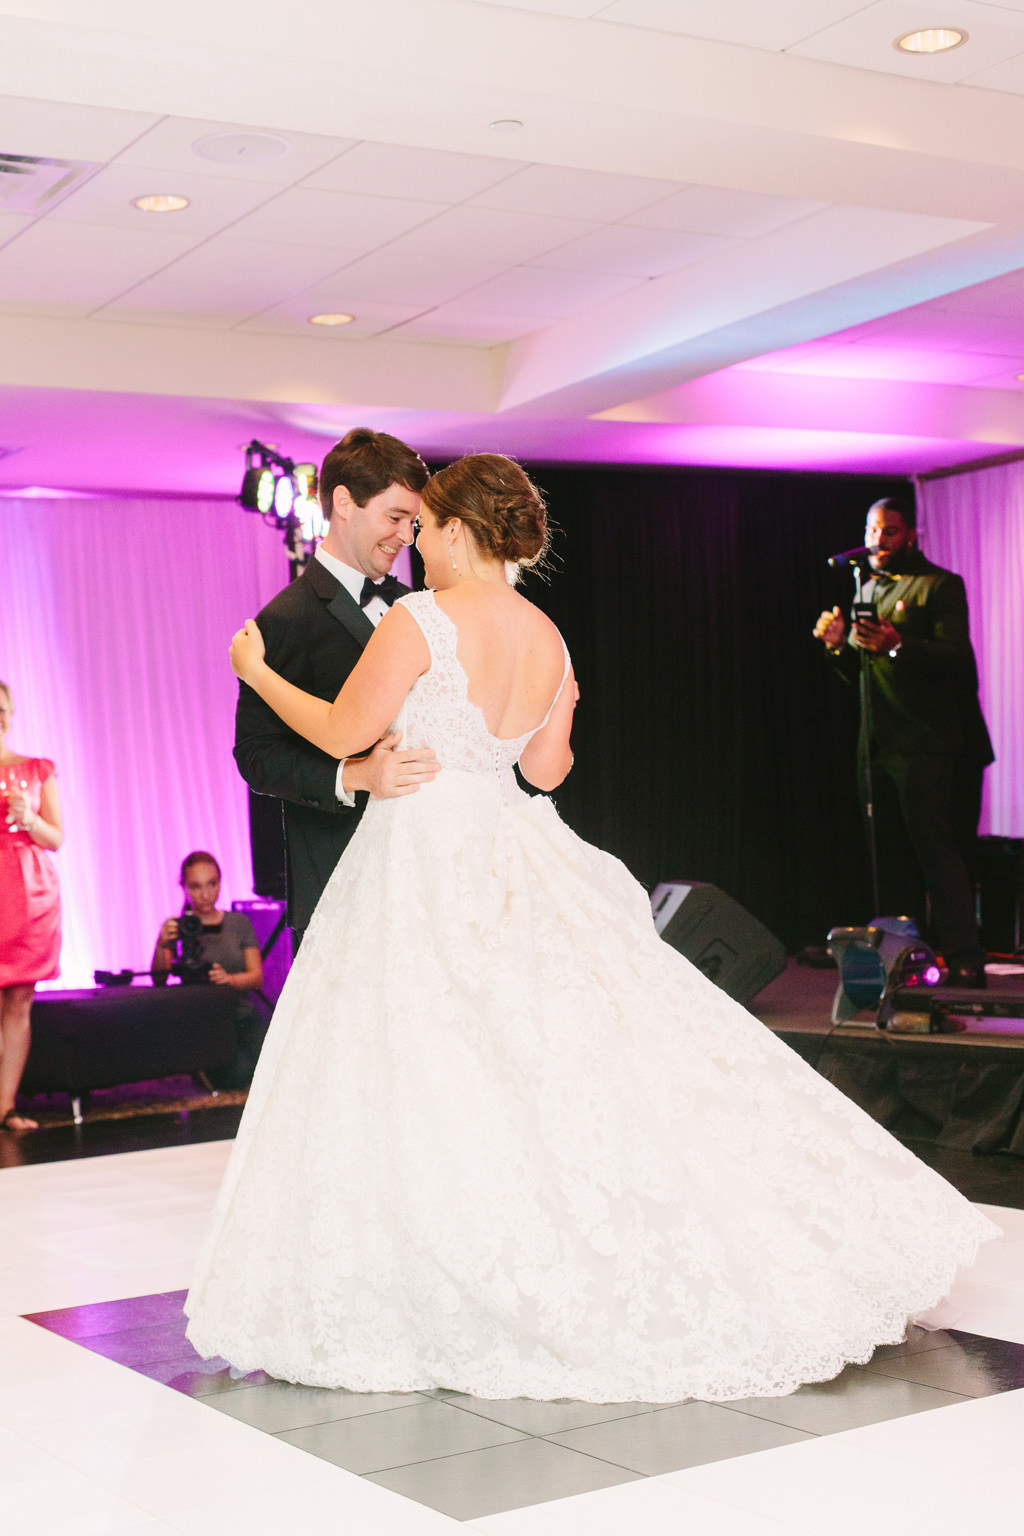 Florida Bride and Groom Wedding Reception First Dance | Tampa Bay Wedding Venue Bellair Country Club